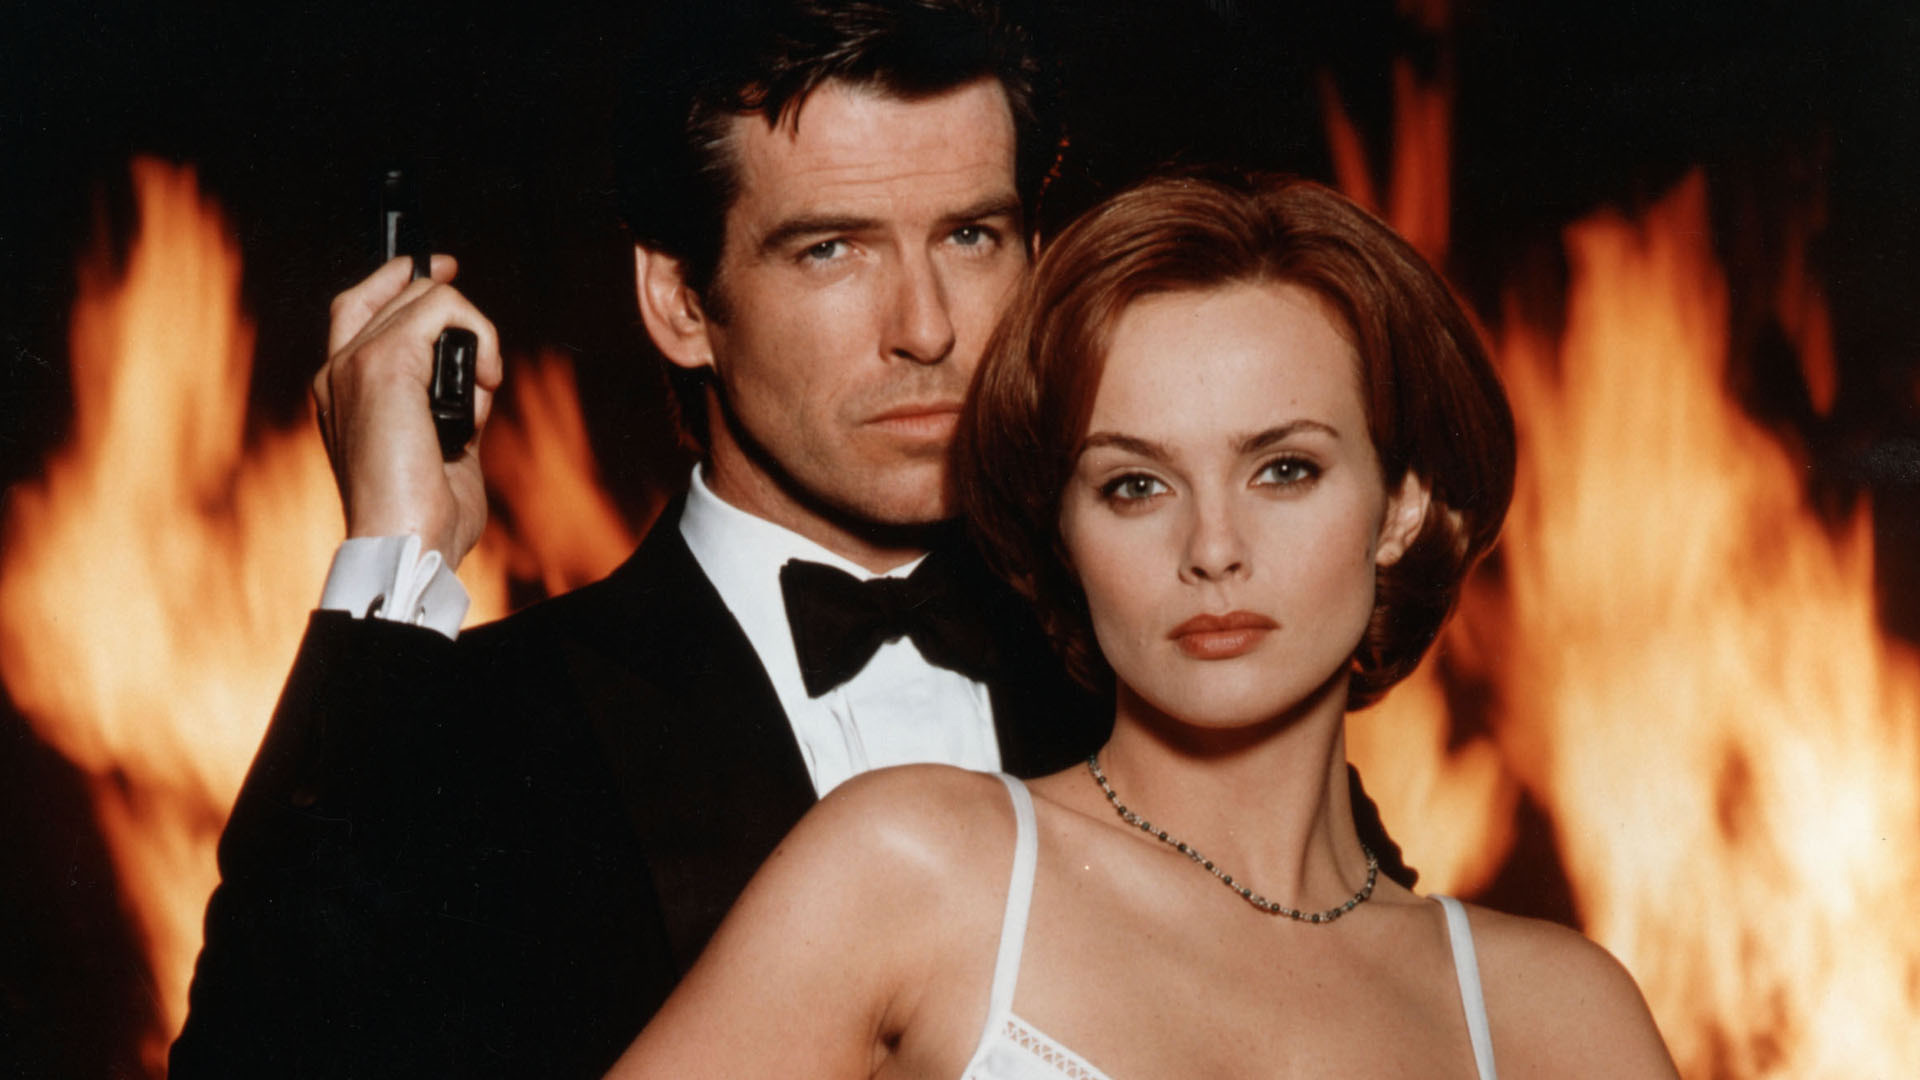 James Bond 007 Golden Eye, High-definition wallpaper, Classic film, Iconic imagery, 1920x1080 Full HD Desktop